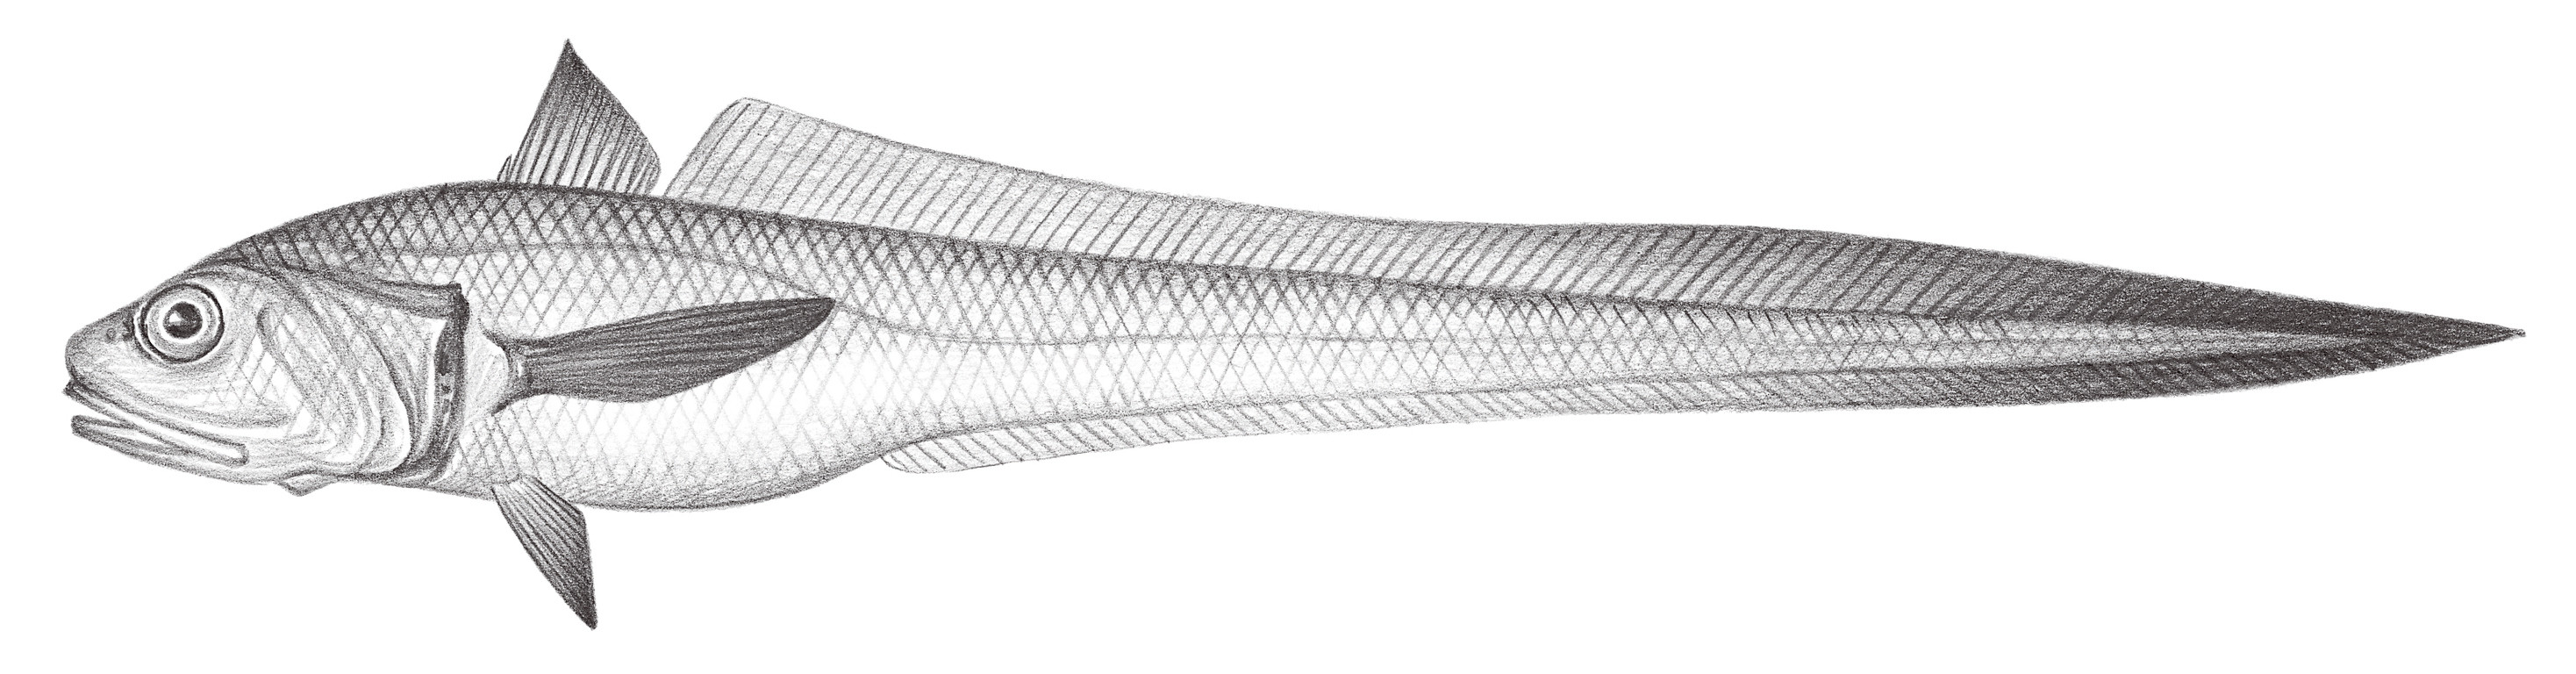 550.	日本底尾鱈 Bathygadus nipponicus (Jordan & Gilbert, 1904)